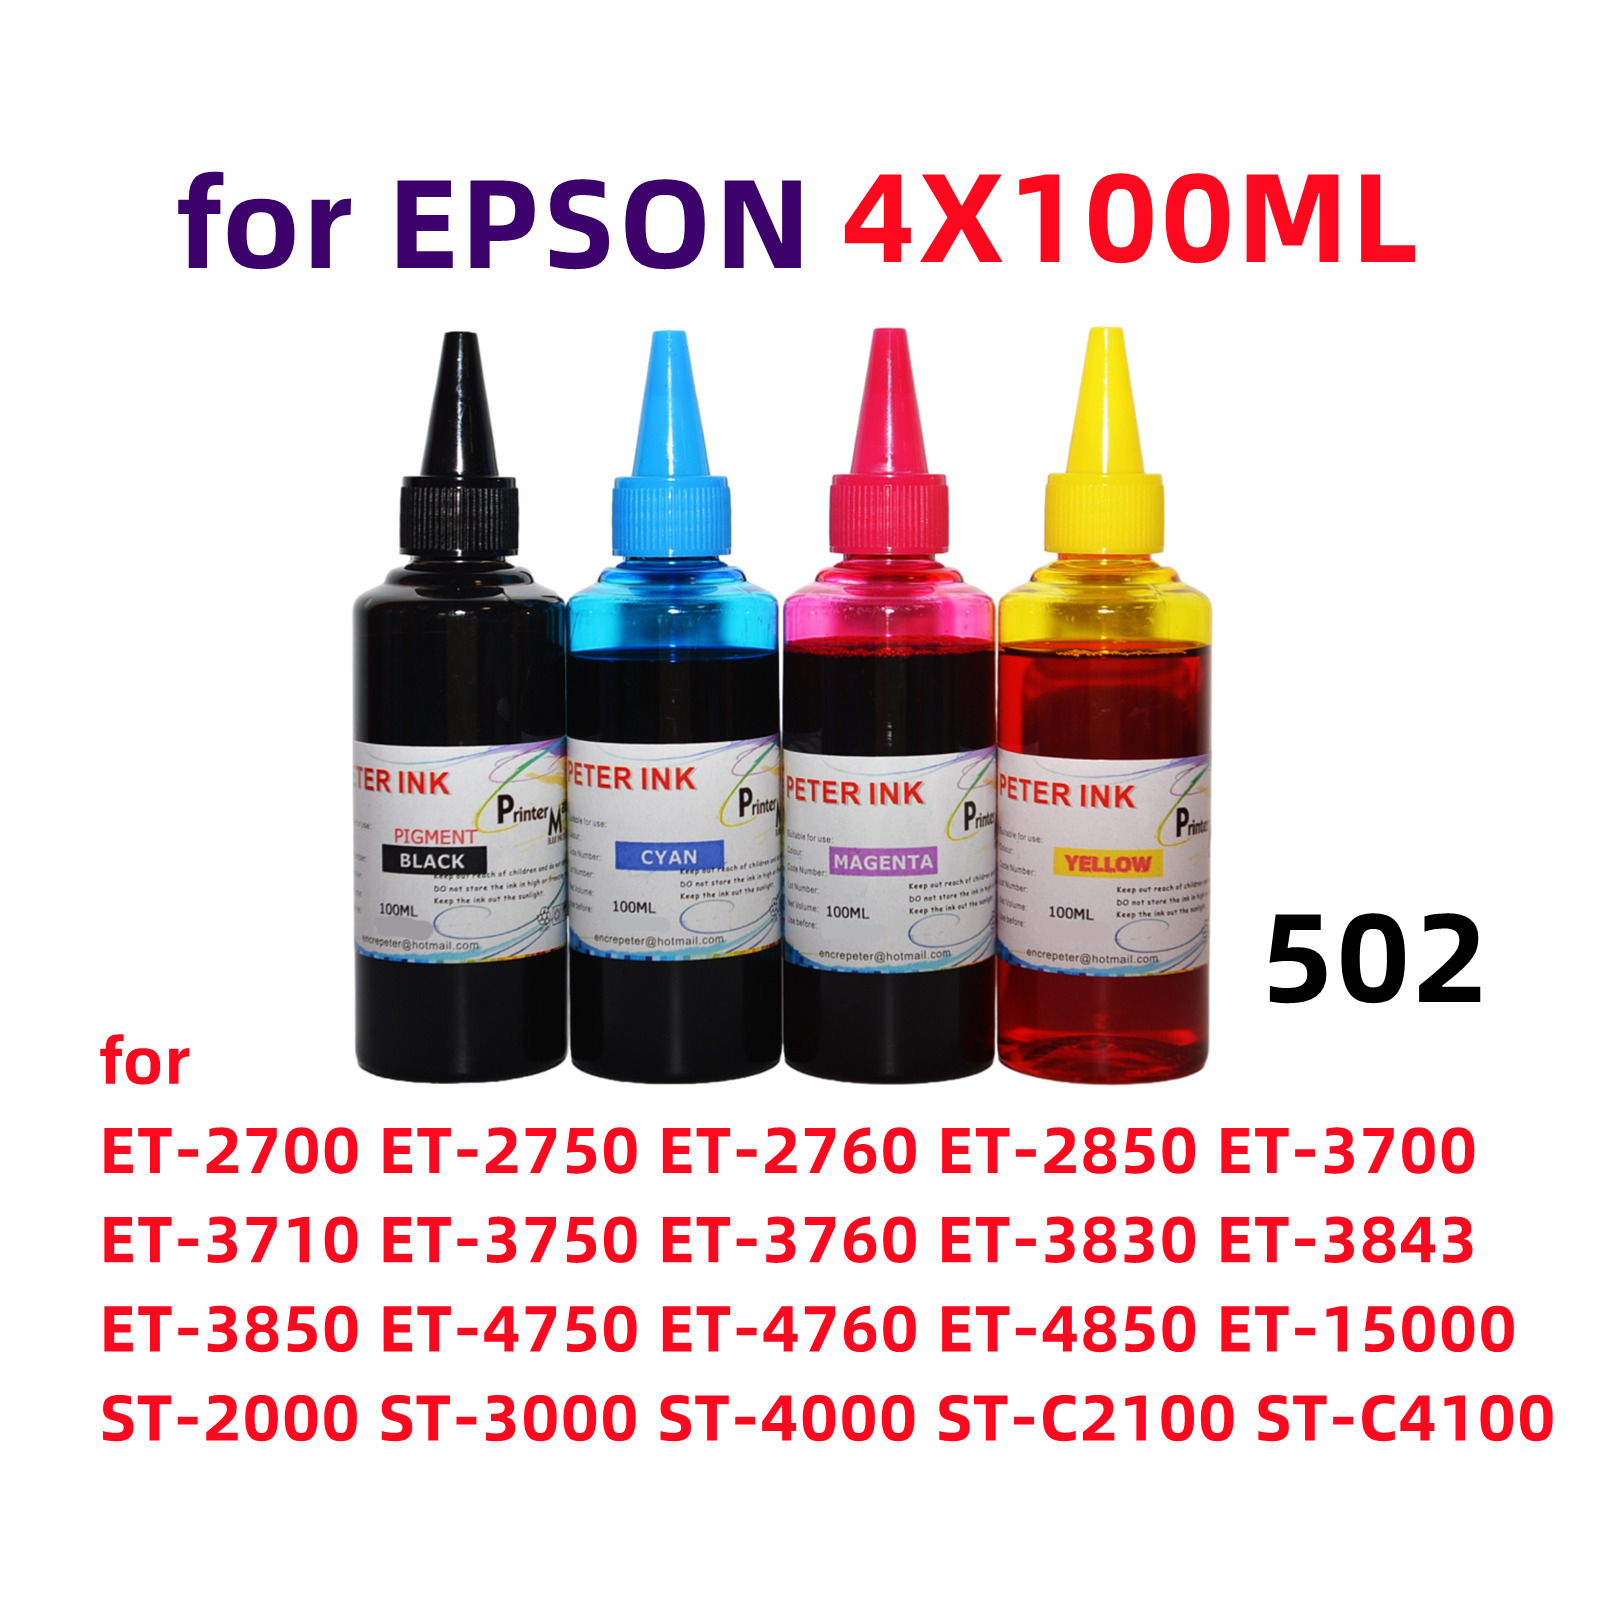 4X100ML Premium ink refills for ET 3830 3760 3750 3710 3700 Printer 502